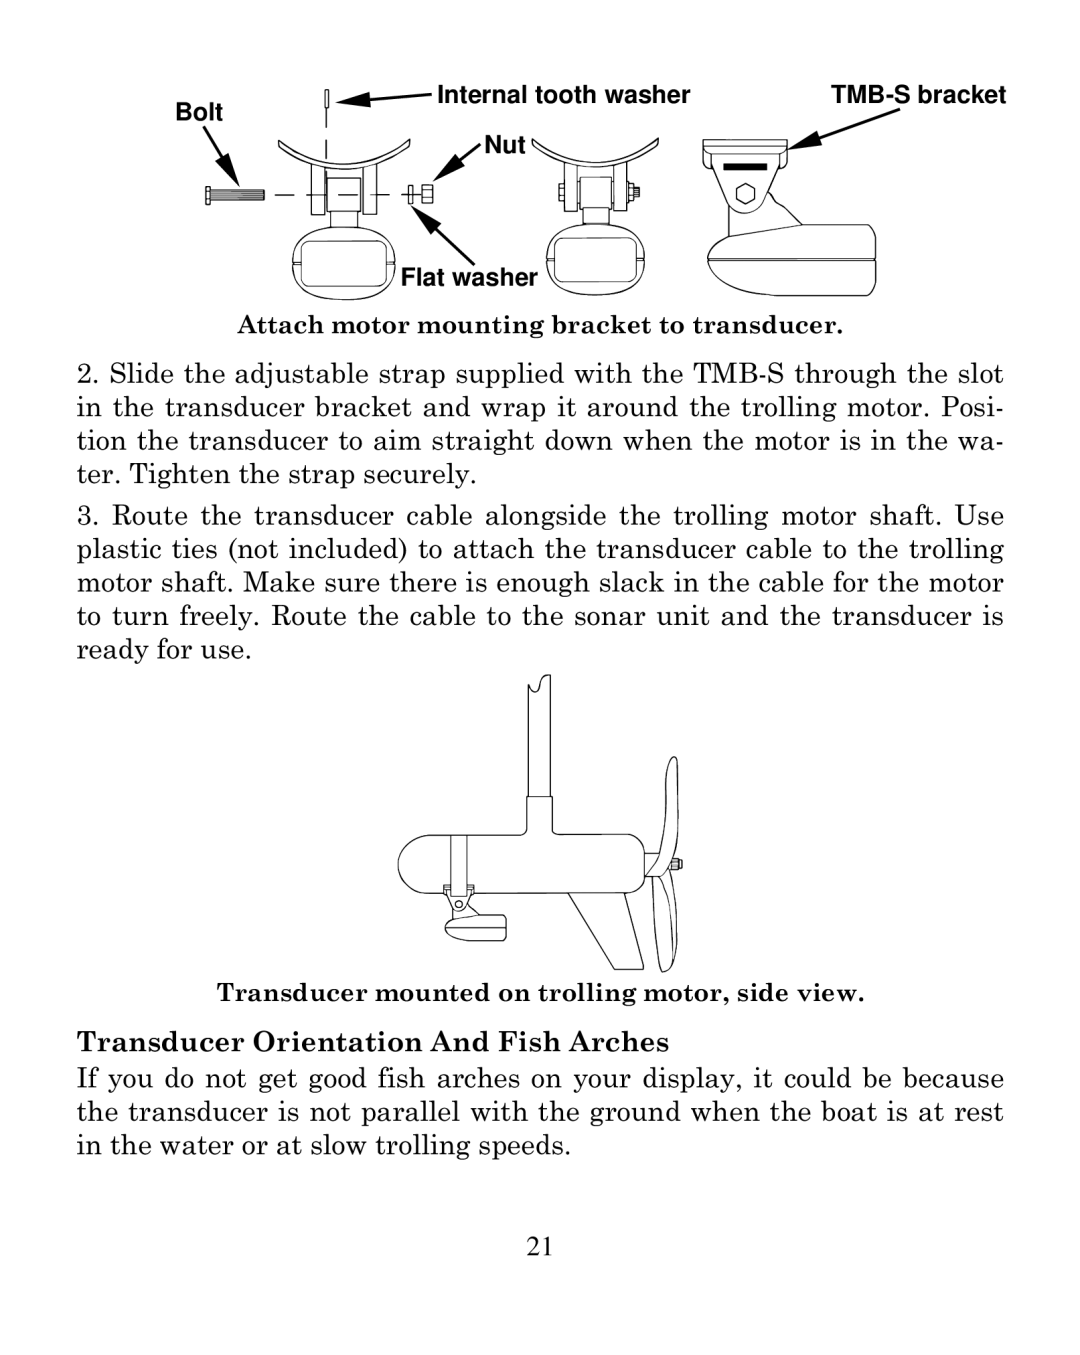 Eagle Electronics 320C manual Transducer Orientation And Fish Arches 